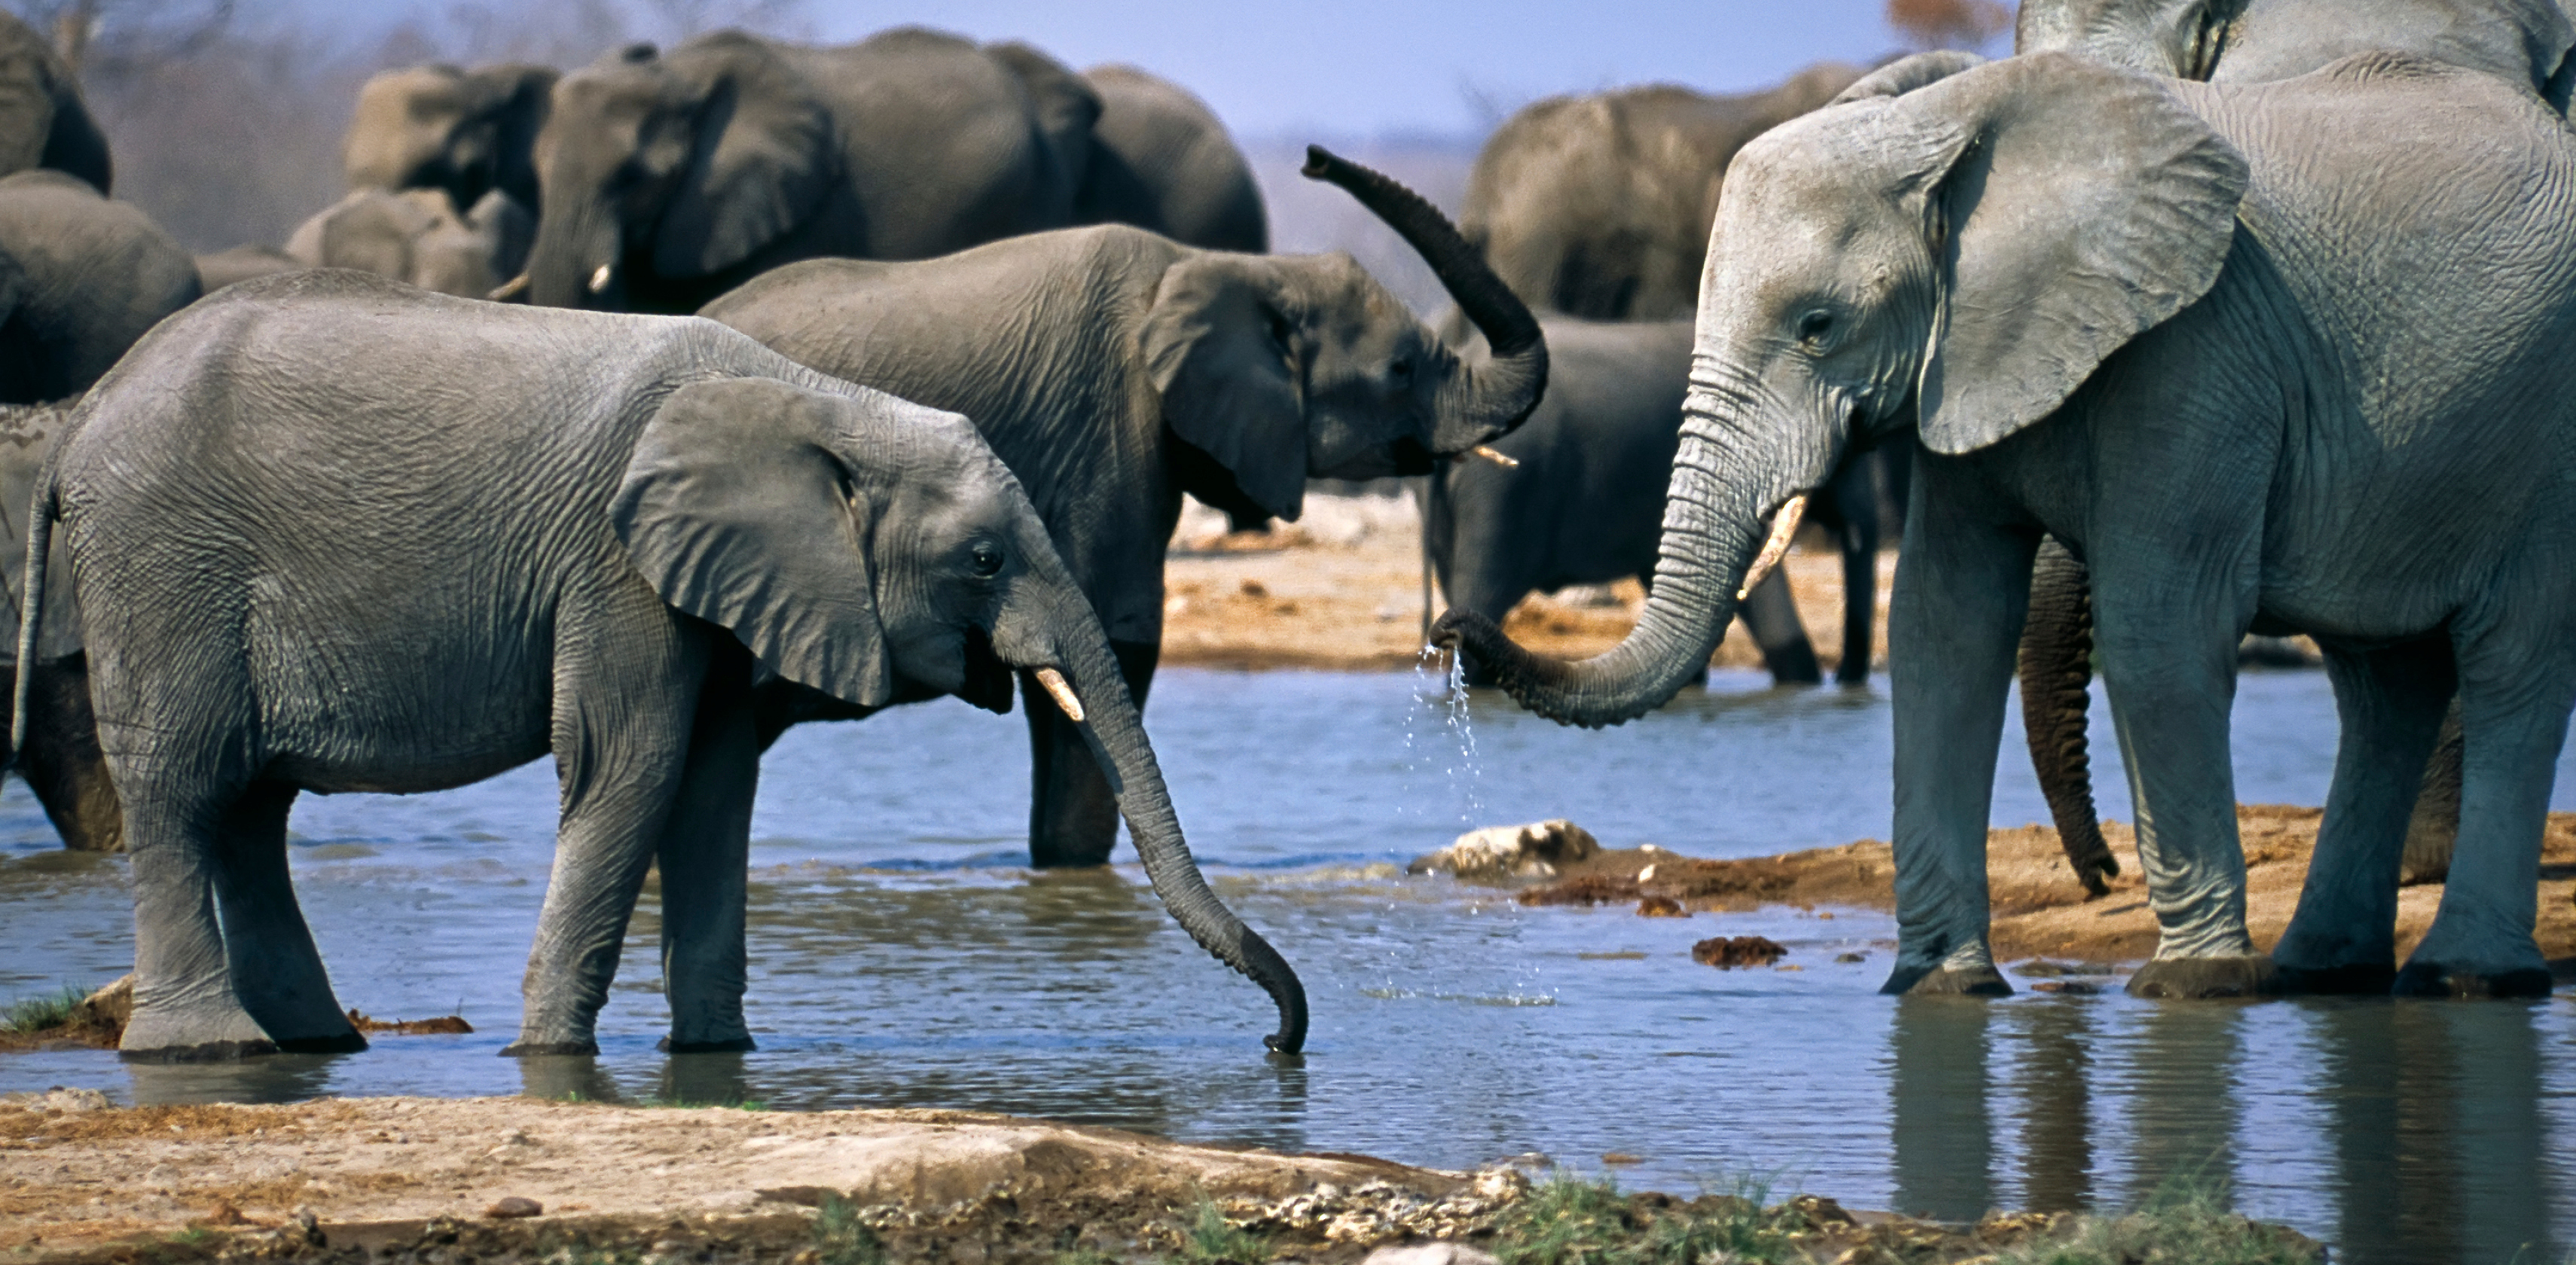 African elephant photo